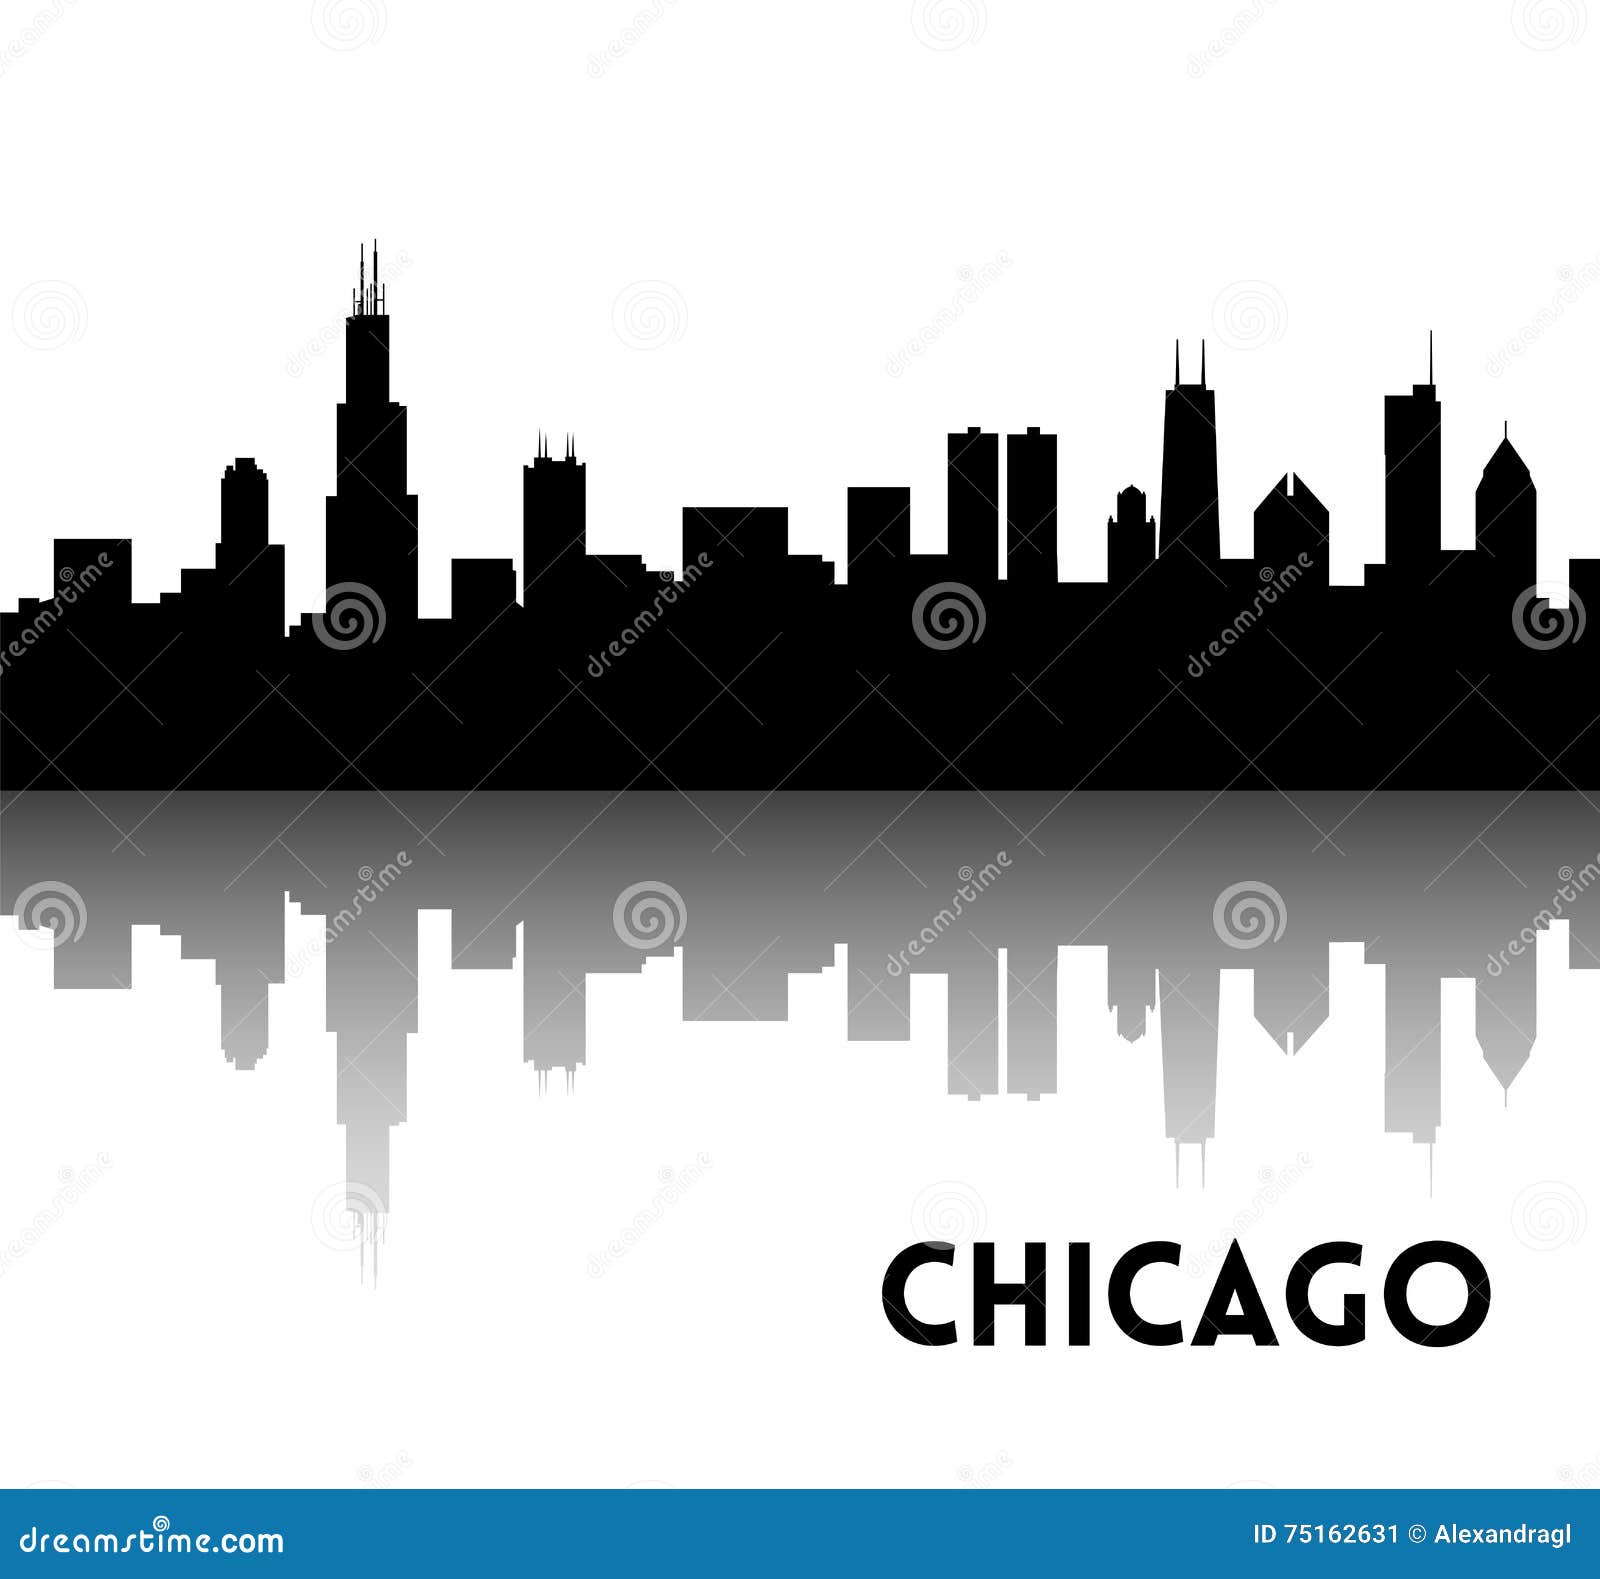 Chicago Skyline Logo Sketch Vector Illustration | CartoonDealer.com